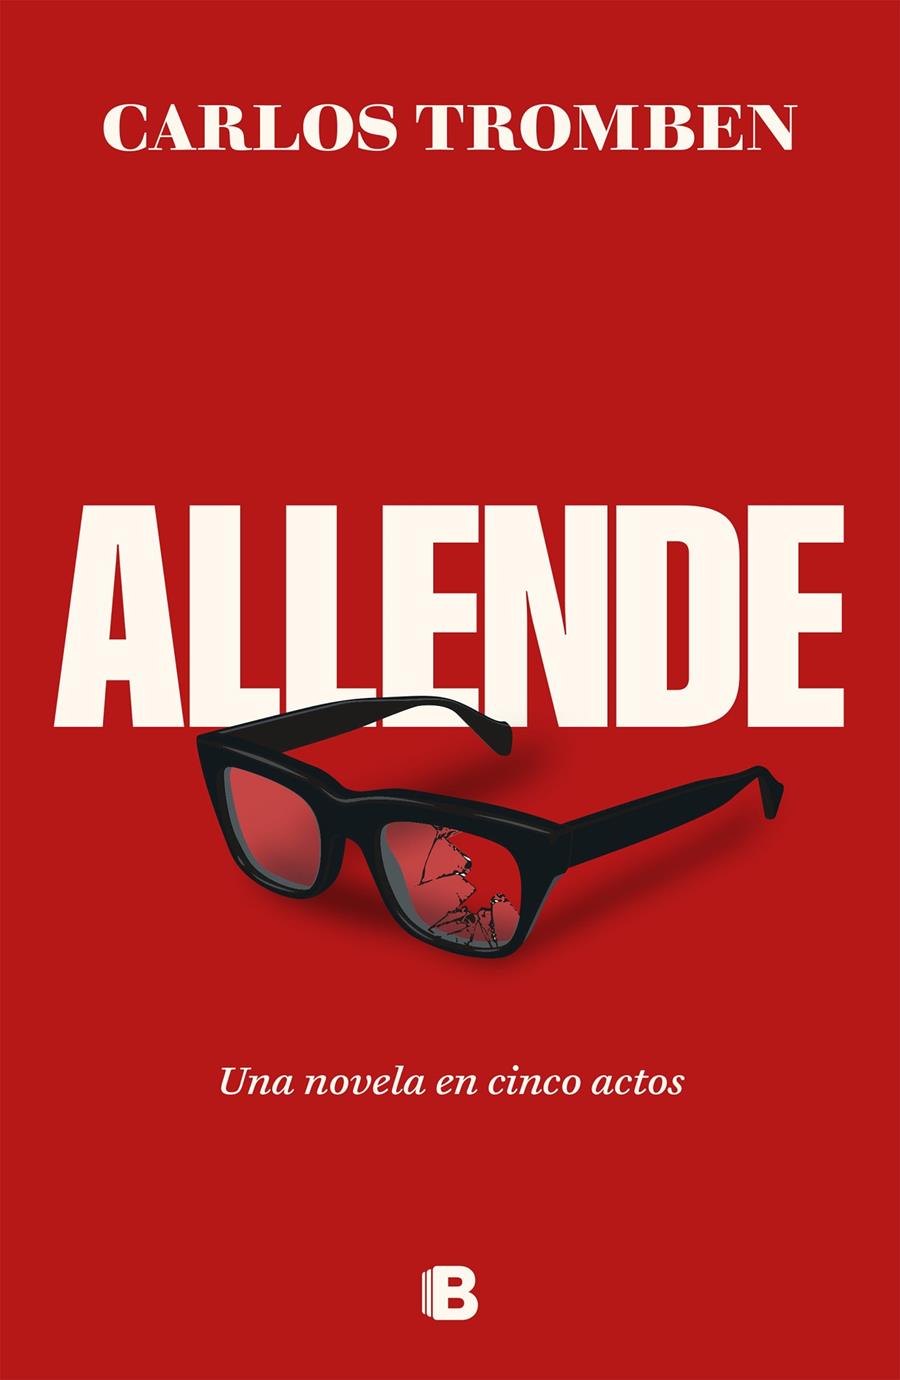 Allende. Una novela en cinco actos | Tromben, Carlos | Cooperativa autogestionària